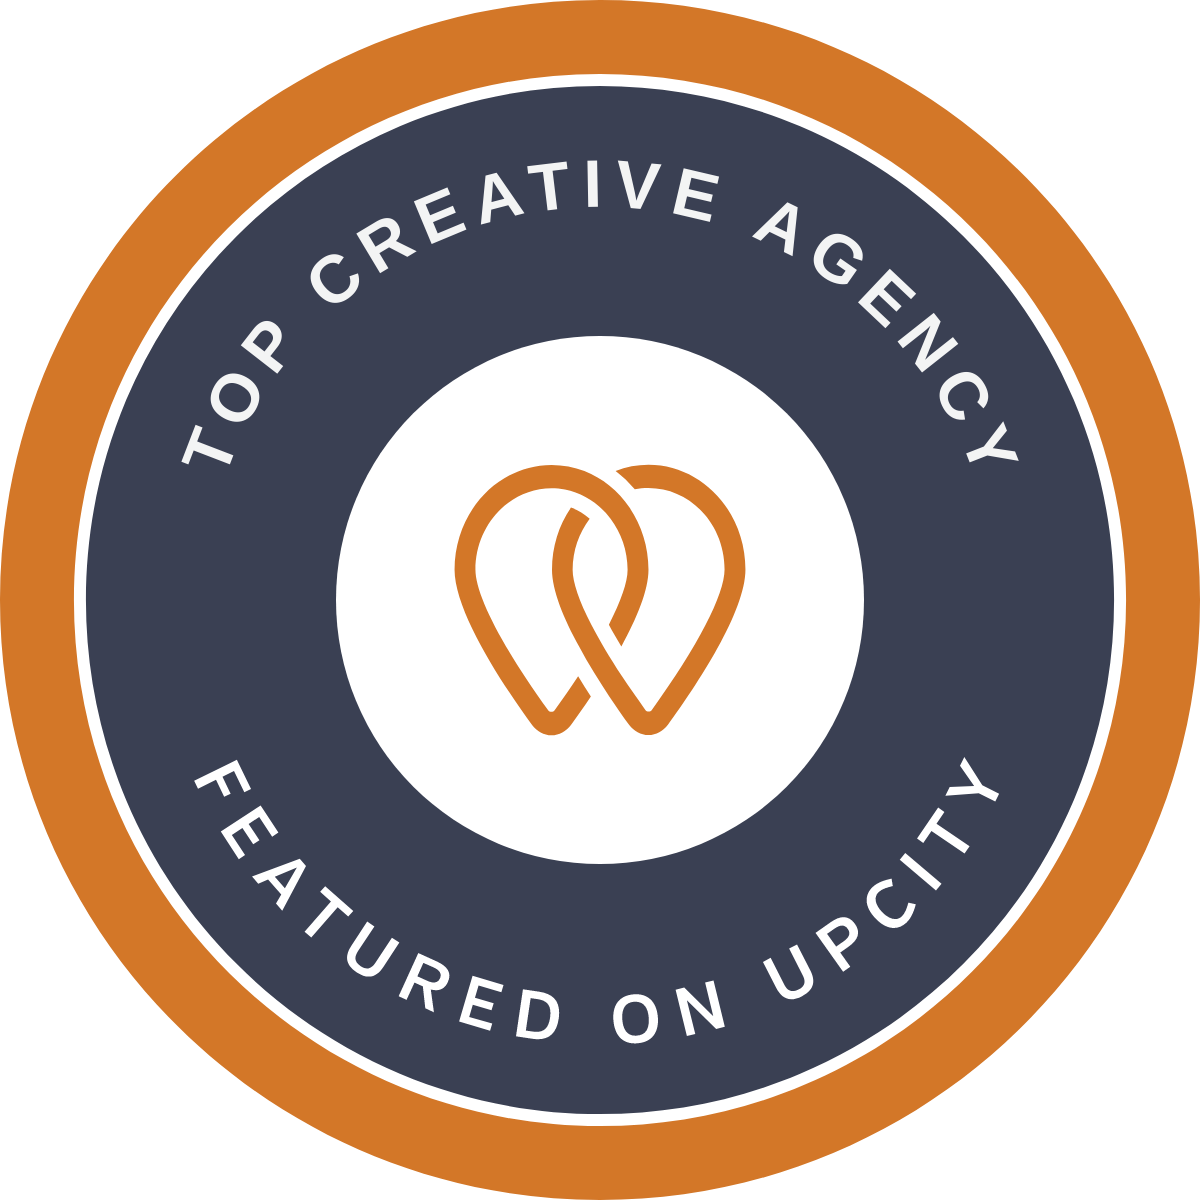 Hamilton, Ontario, Canada 营销公司 CodeMasters Agency 获得了 Top Creative Agency 奖项